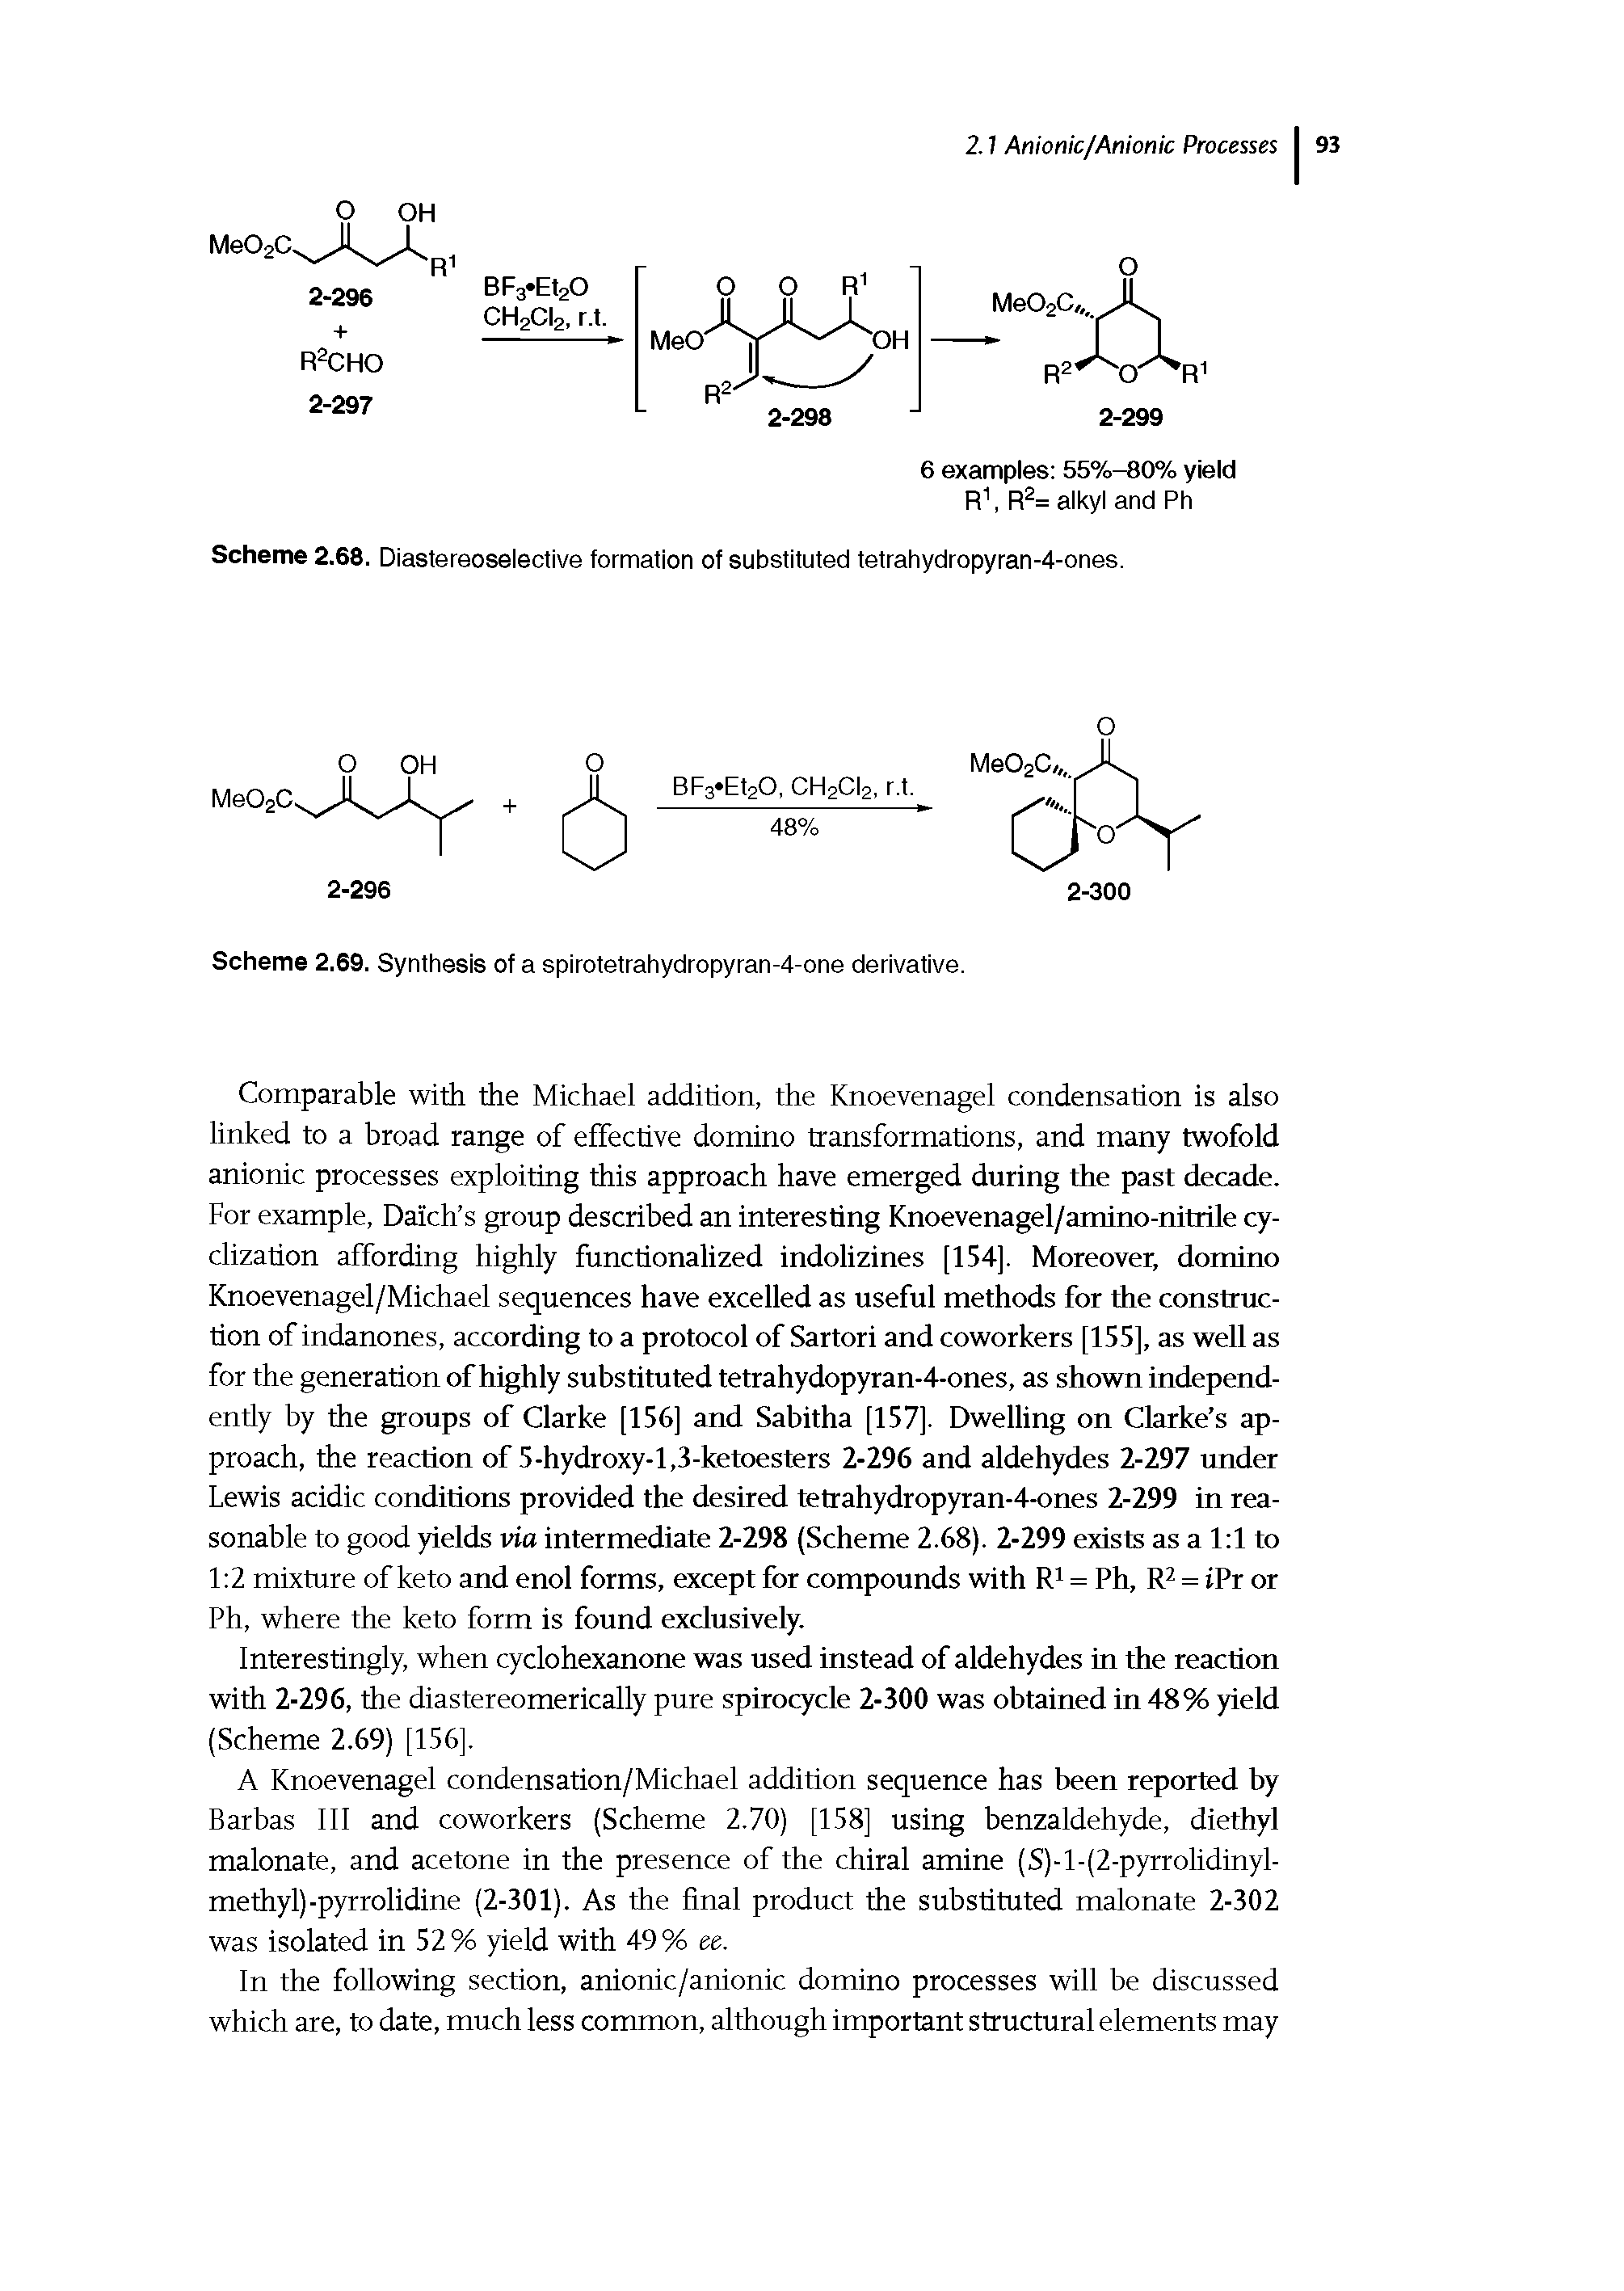 Scheme 2.68. Diastereoselective formation of substituted tetrahydropyran-4-ones.